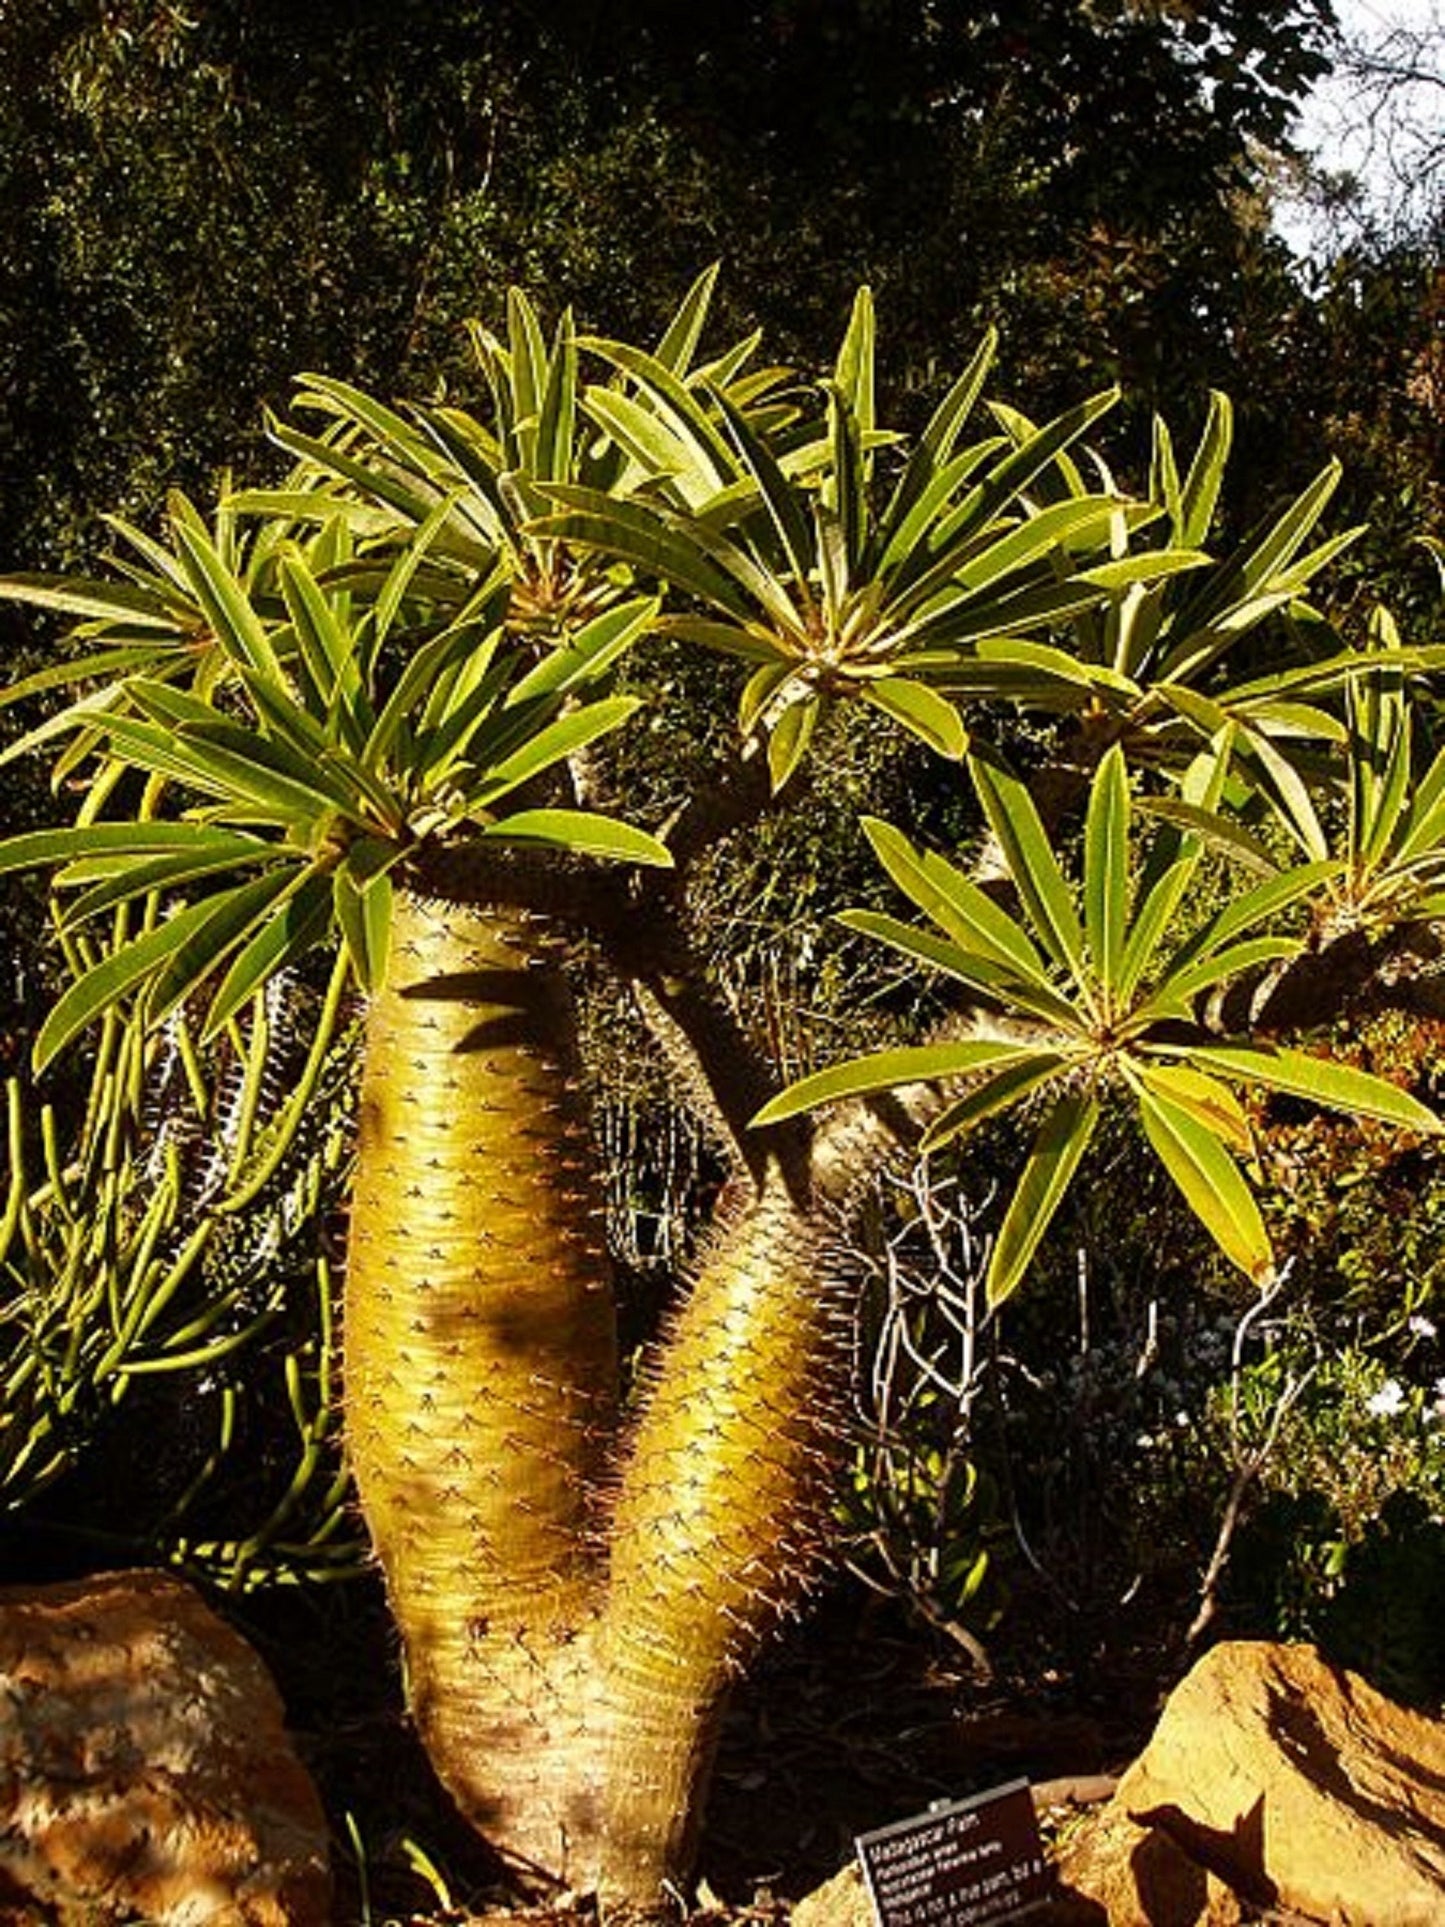 RAVENALA madagascariensis - Travelers Palm, seed, buy – Australian